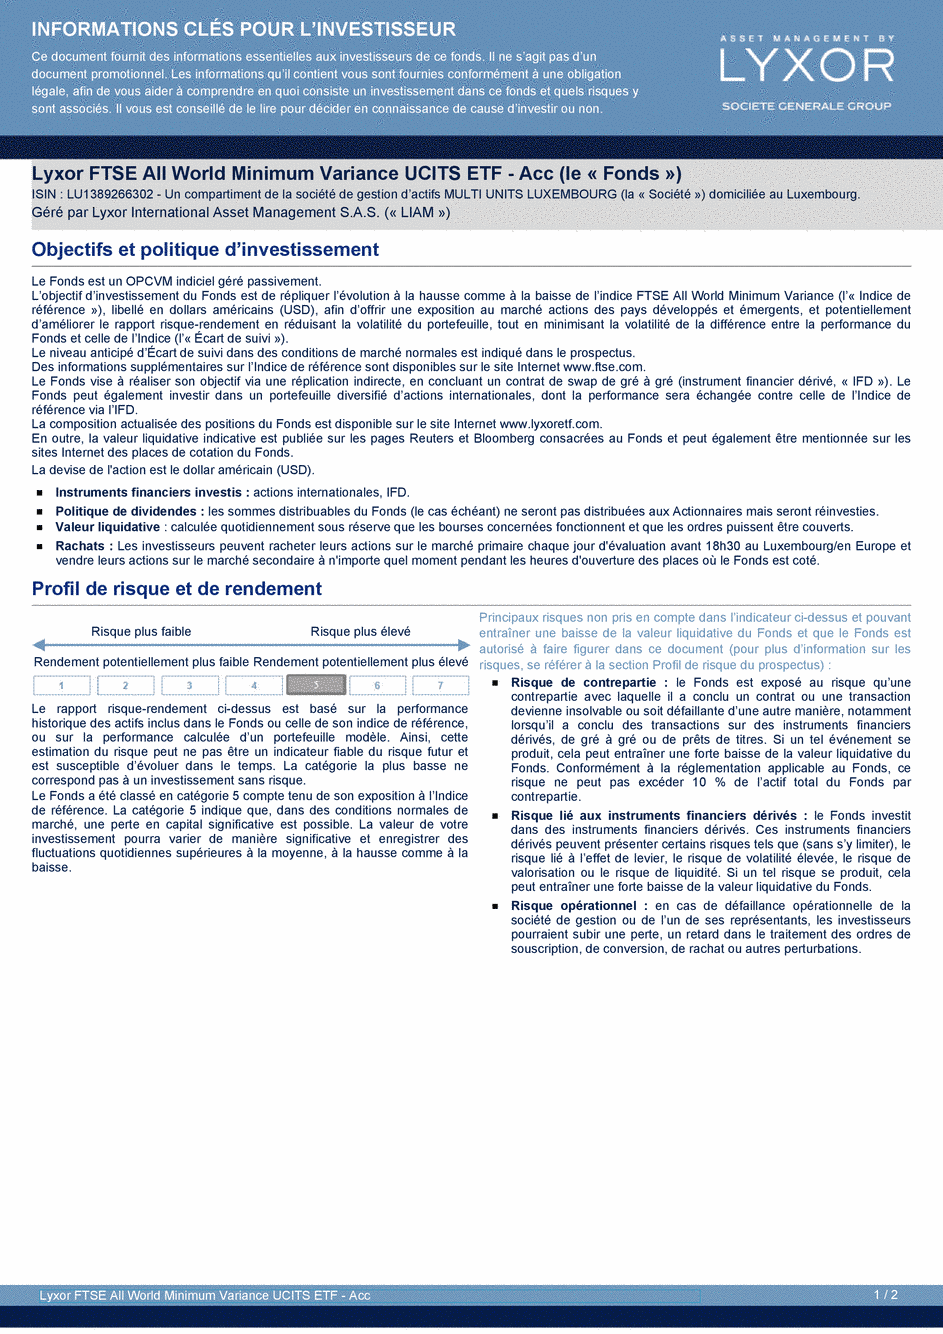 DICI Lyxor FTSE All World Minimum Variance UCITS ETF - Acc - 14/02/2020 - Français